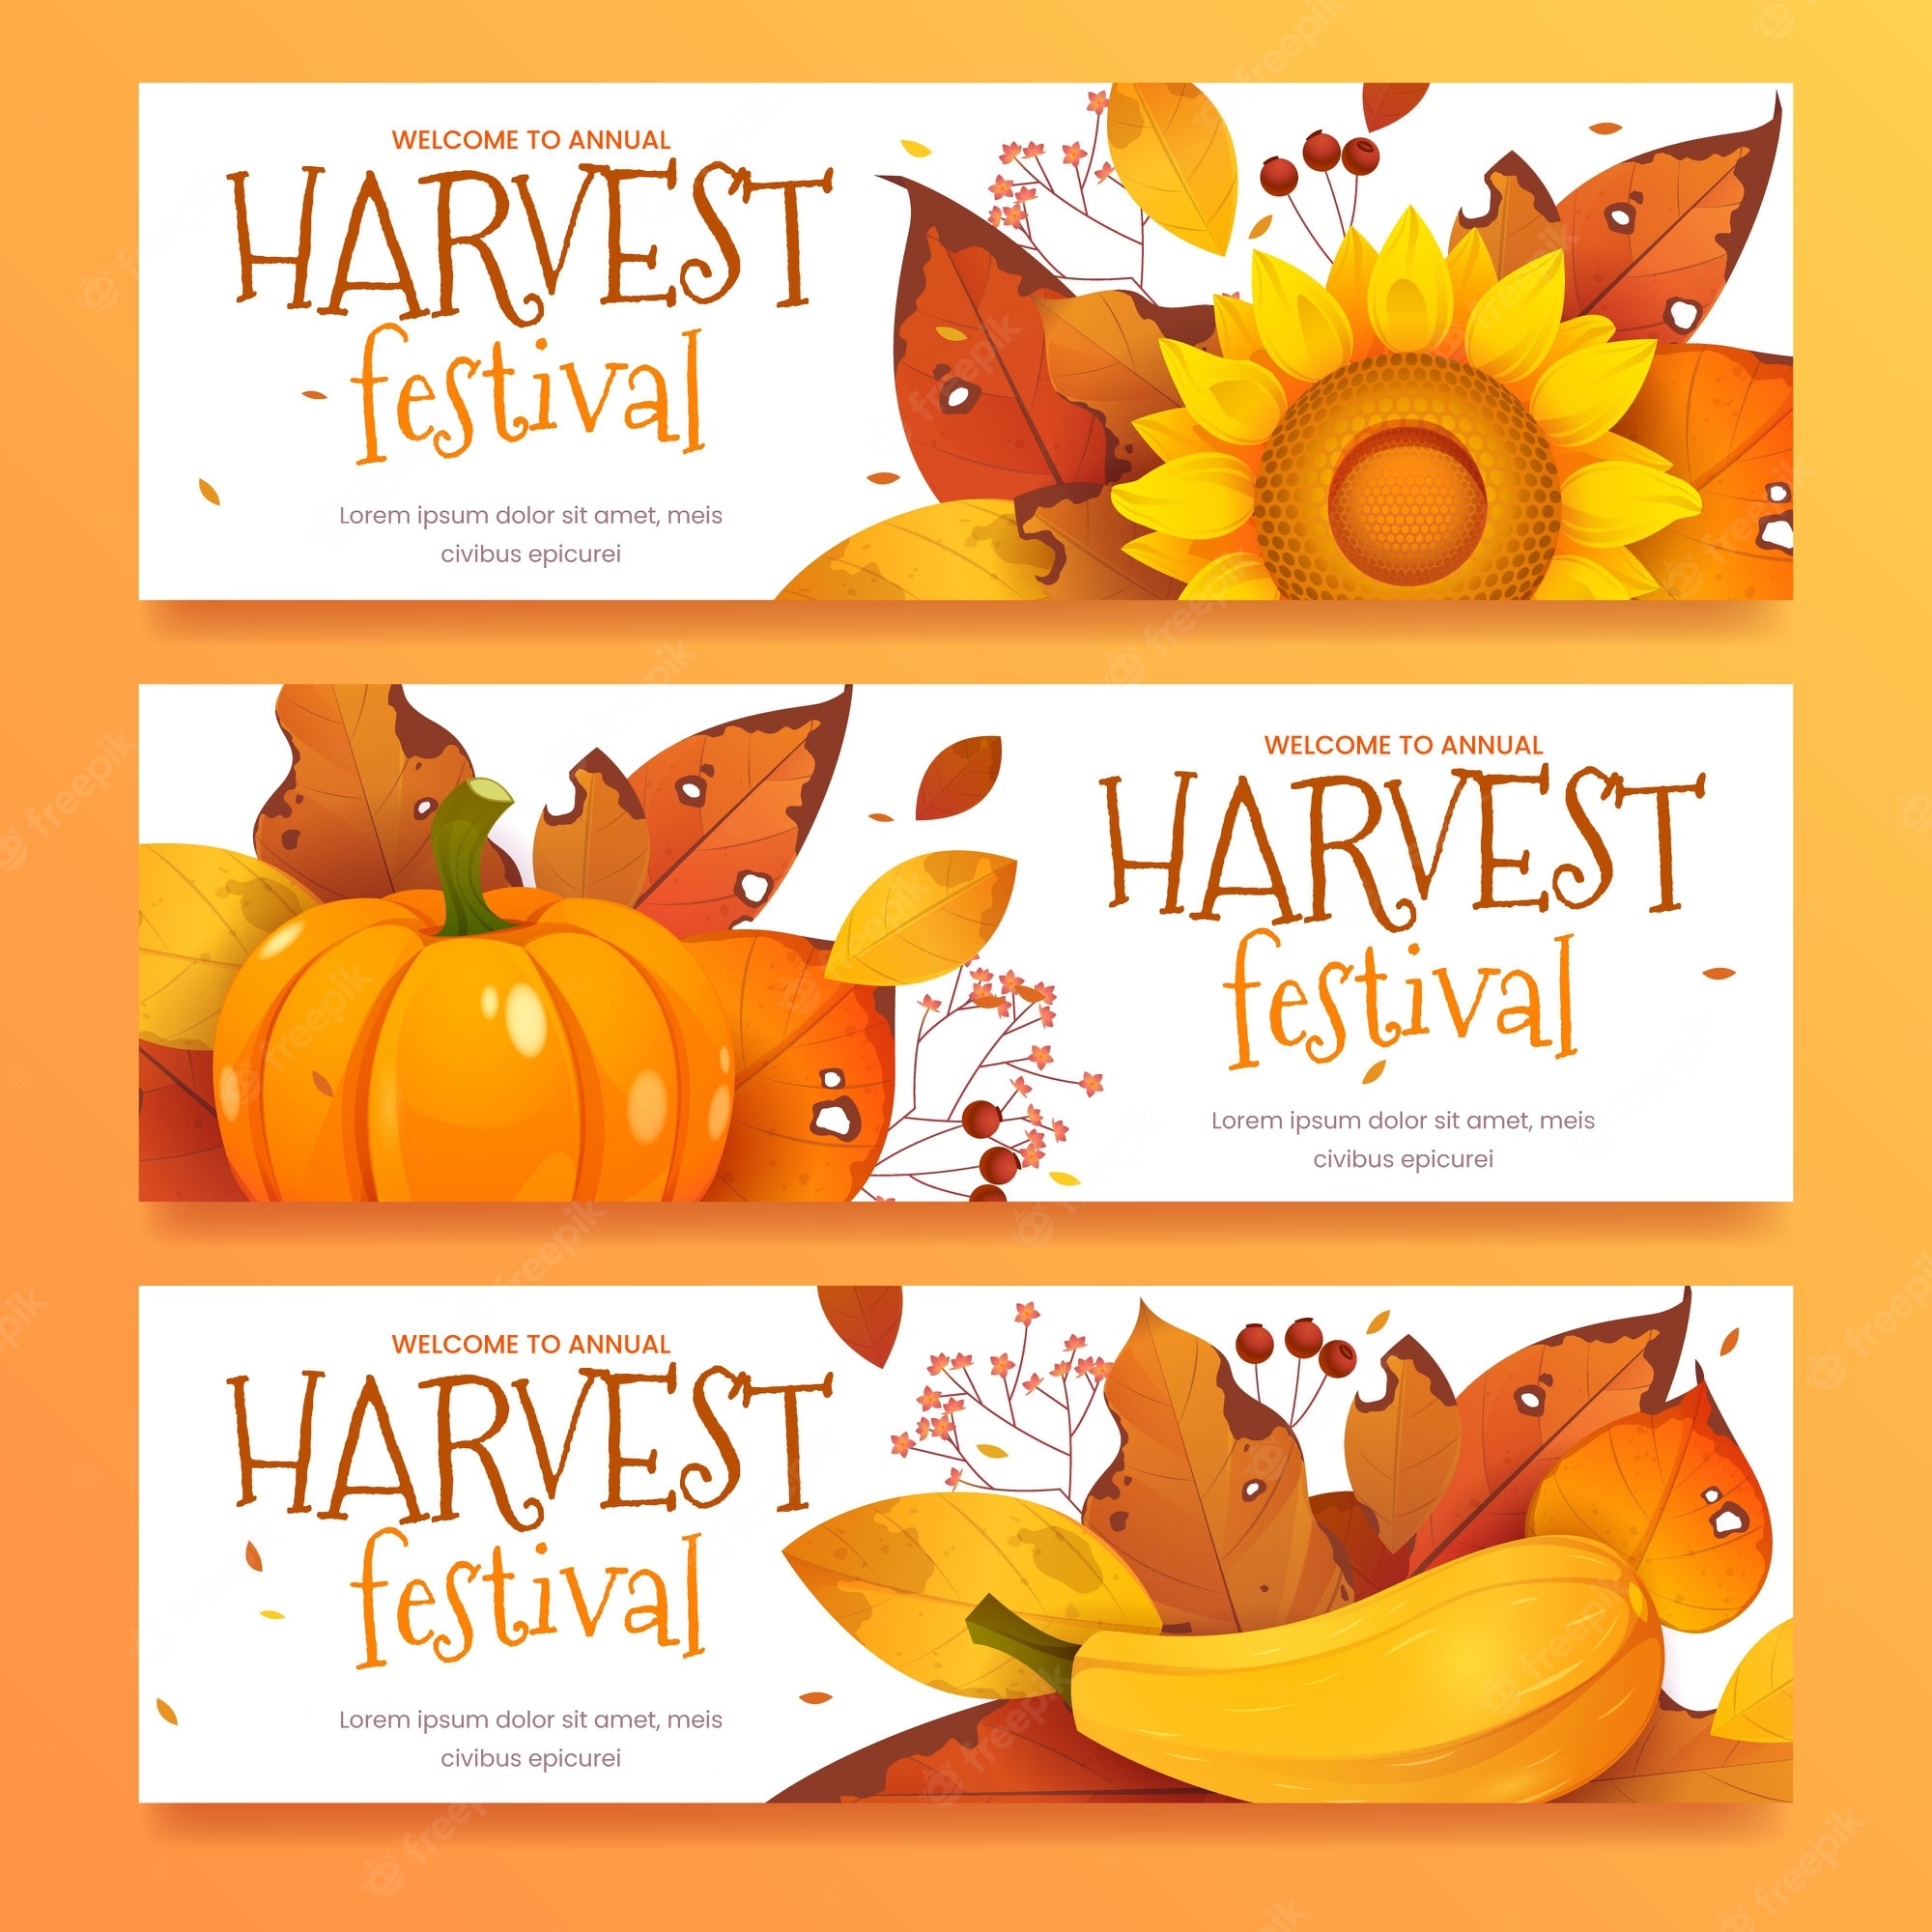 Harvest festival Image. Free Vectors, & PSD